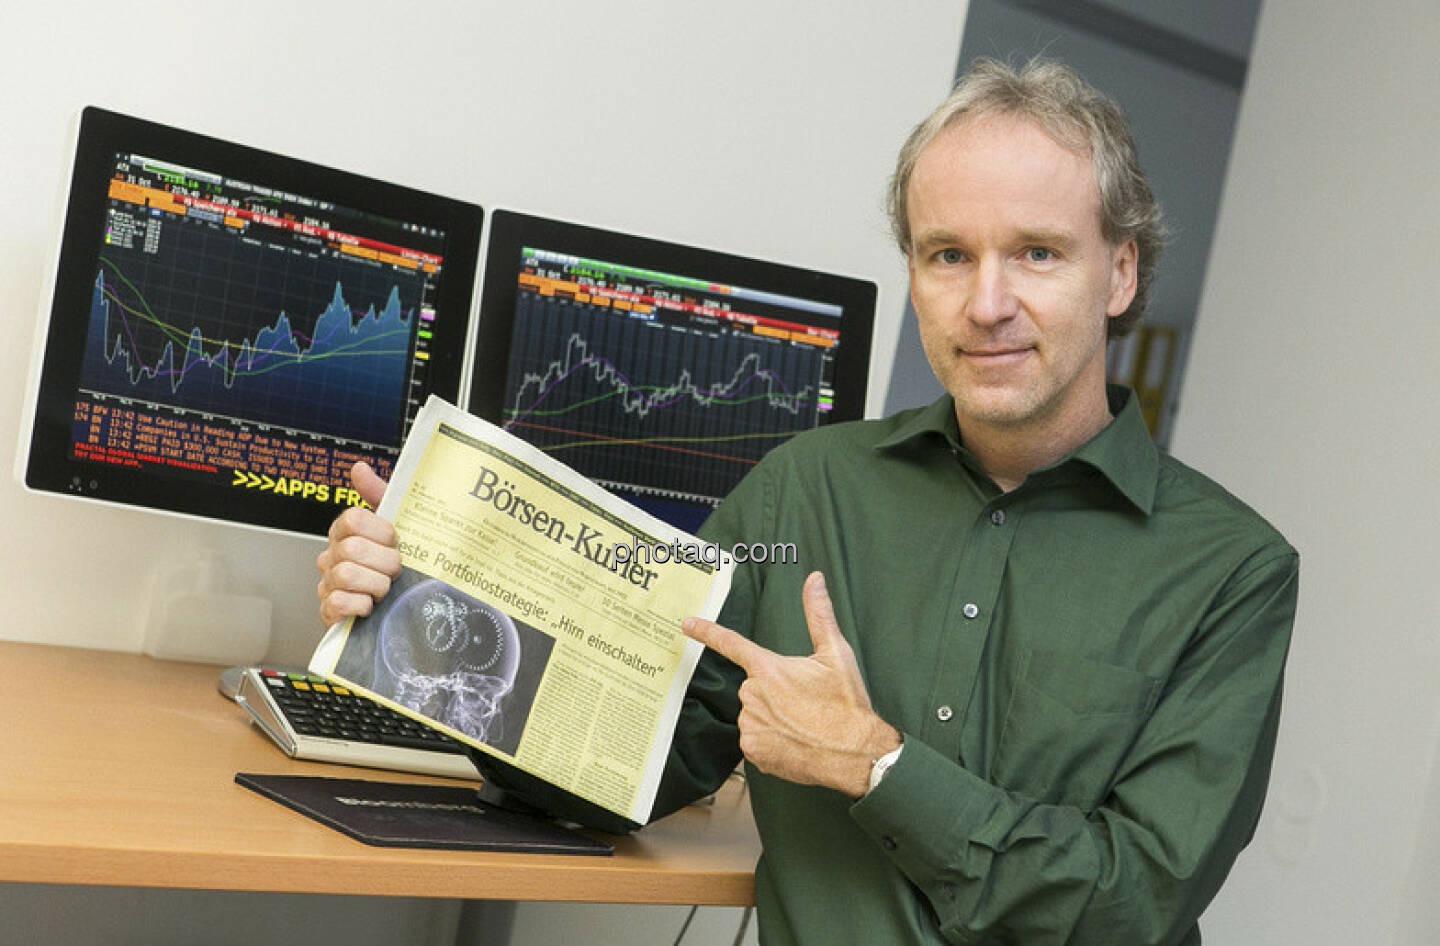 Bloomberg, Börsen-Kurier, Christian Drastil (c) Martina Draper